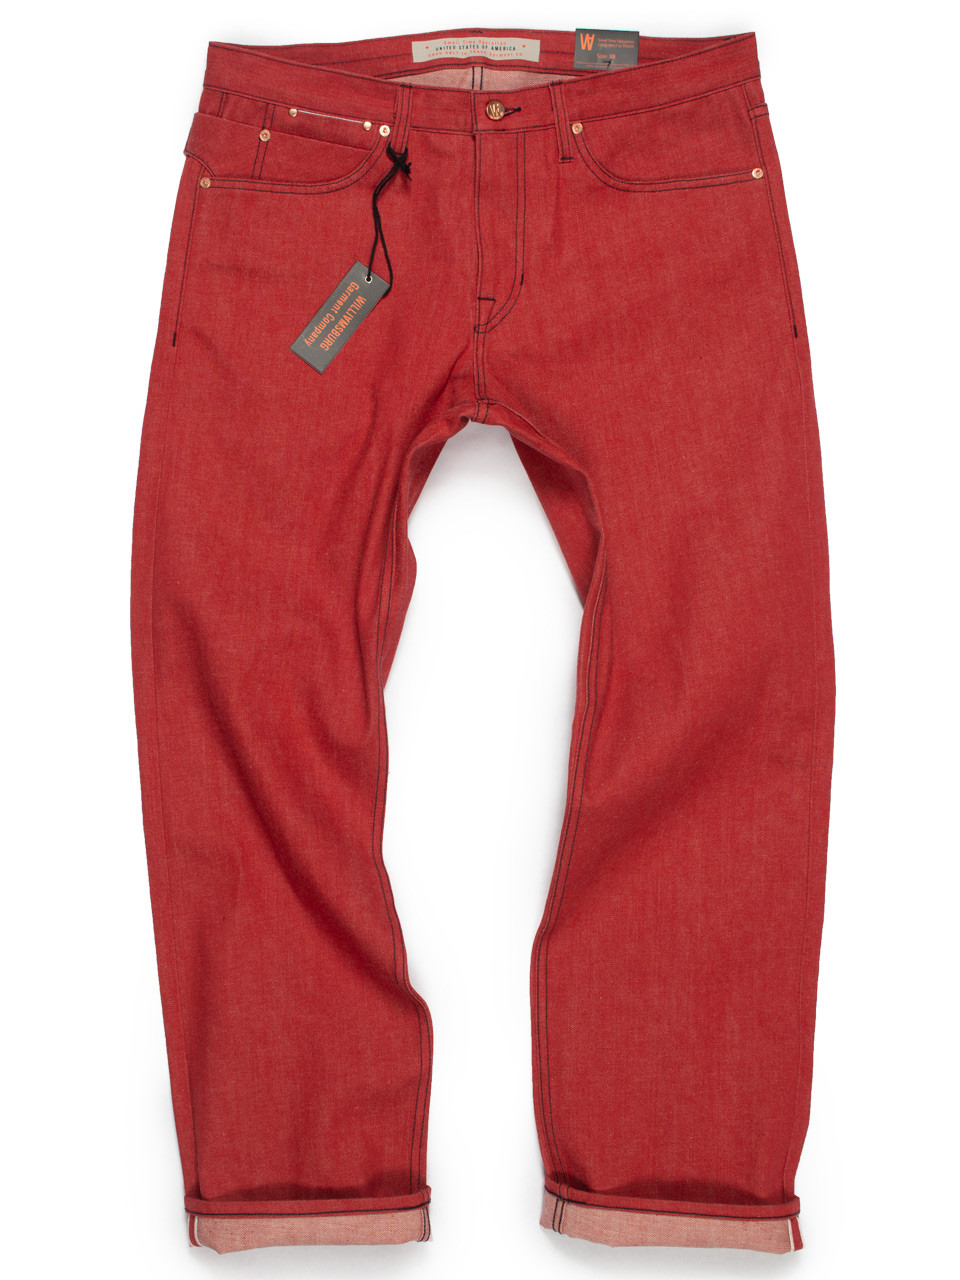 Levis 514 Straight Leg Blue Denim Jeans 38x30 Red Tab Medium | Mens  straight jeans, Blue denim jeans, Blue denim